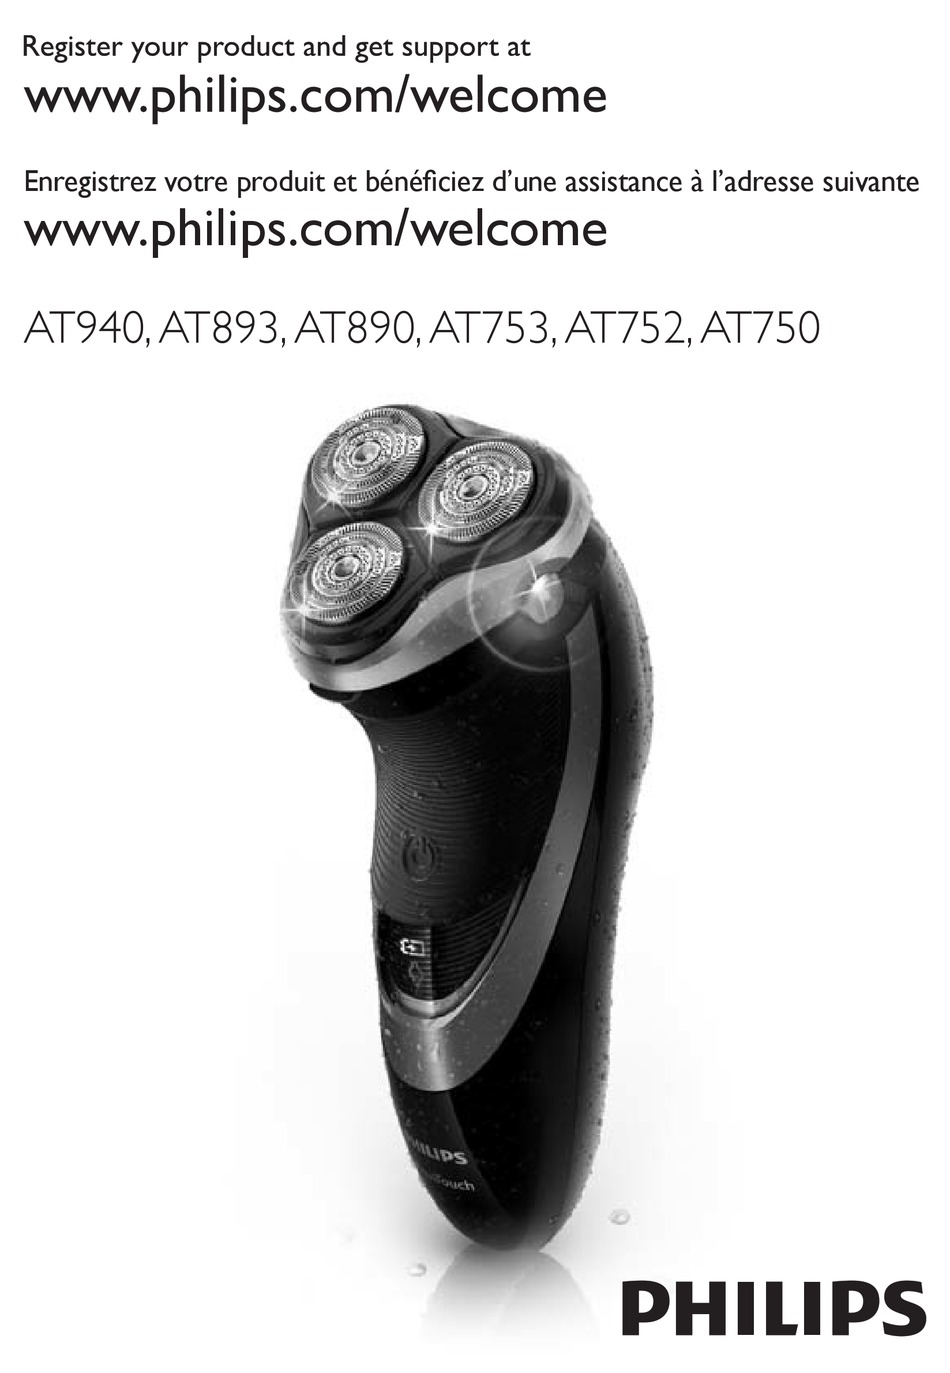 Philips com support. Электробритва Philips pt919. Электробритва Philips at751. Филипс АТ 890/16. Бритва Philips pt 925.